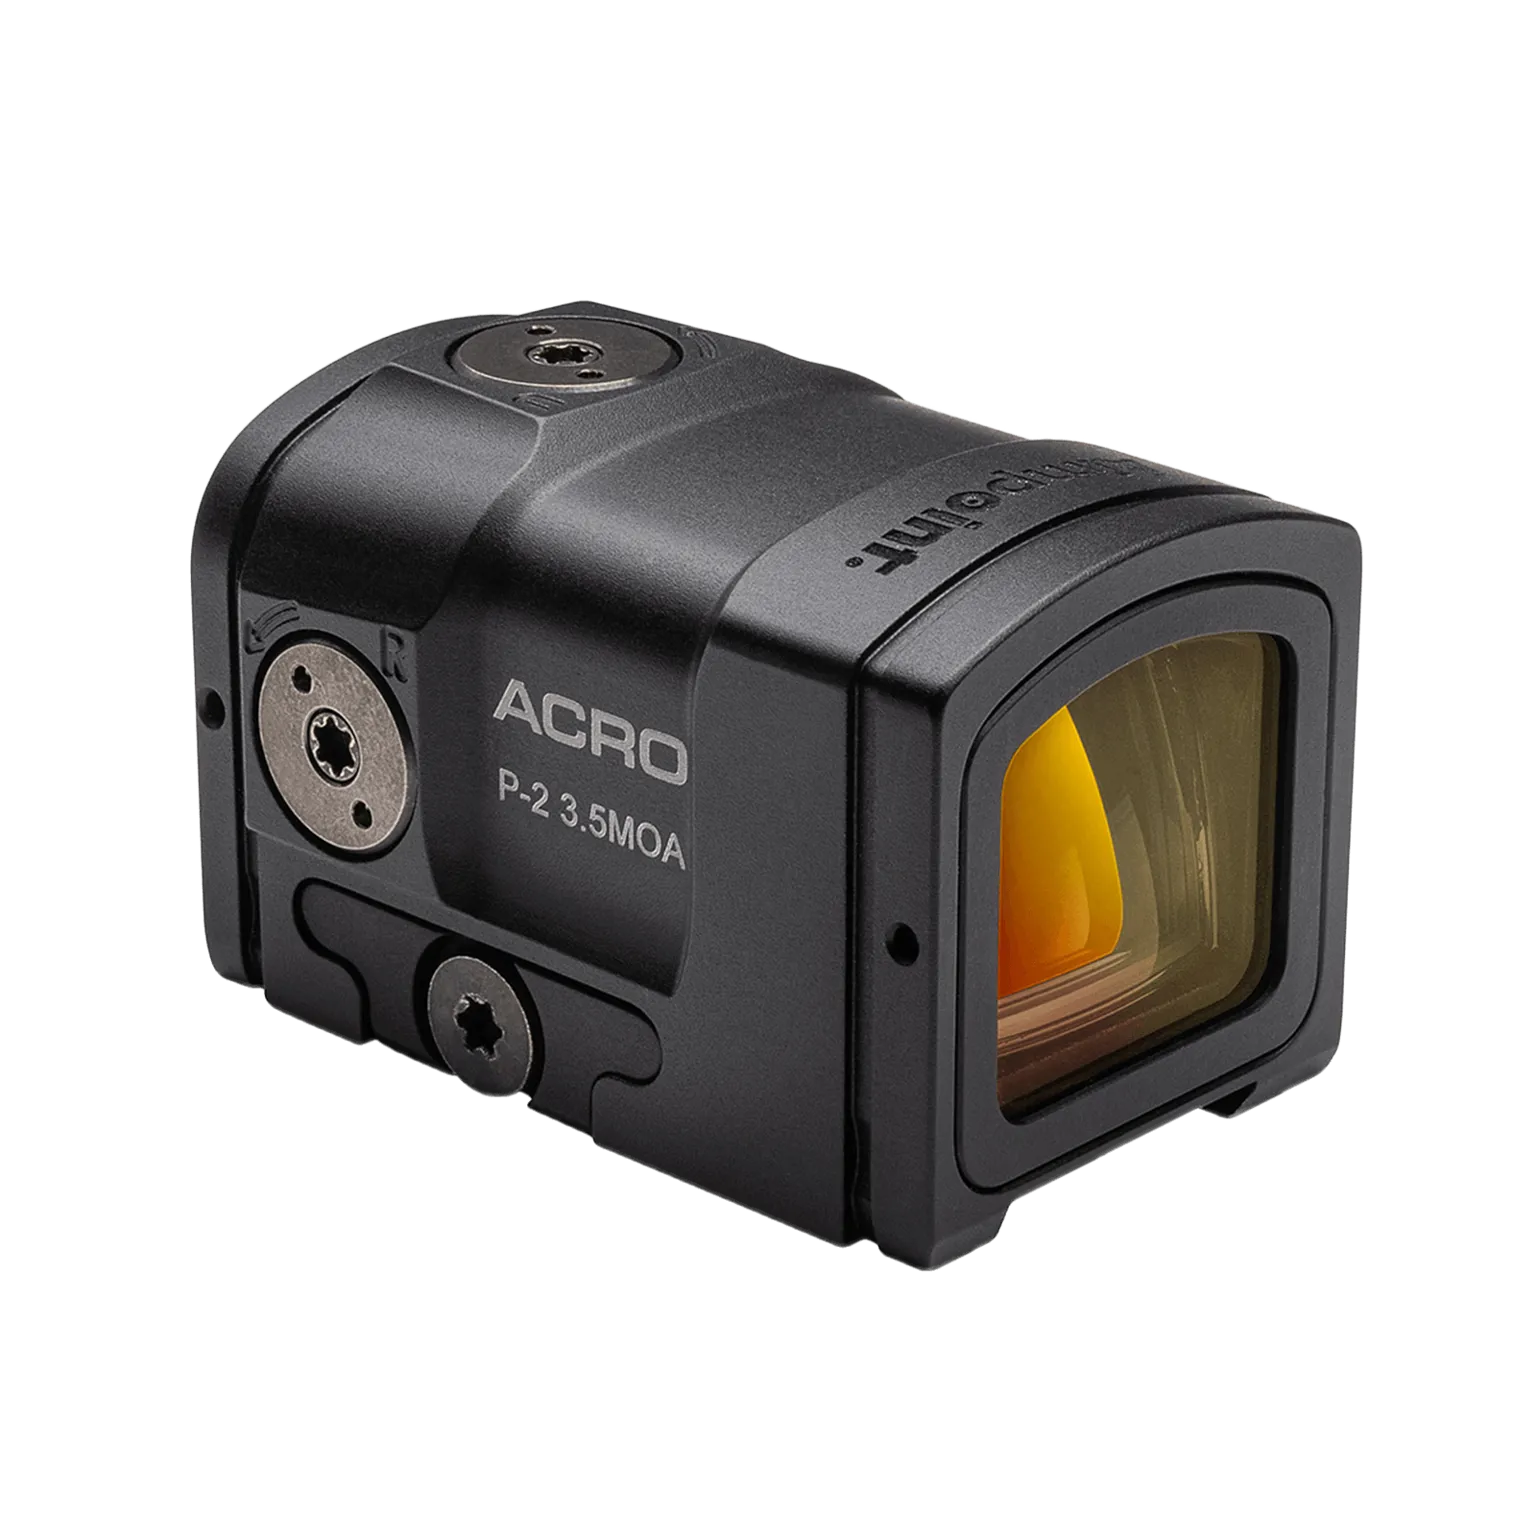 Acro P-2™ 3.5 MOA - Rotpunktvisier mit integrierter Acro™ Schnittstelle - 3